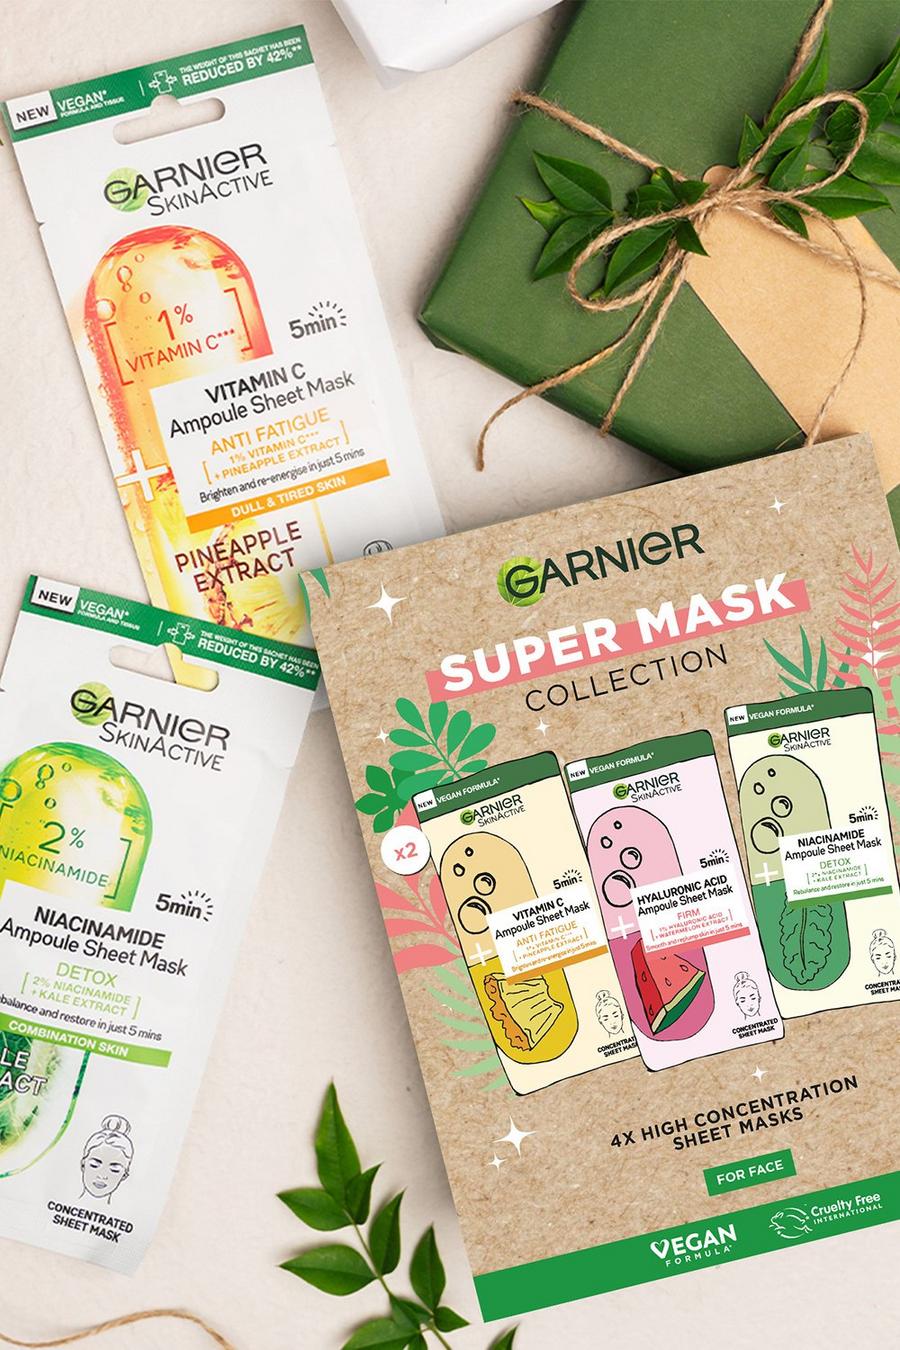 Green Garnier Super Mask Collection Gift Set